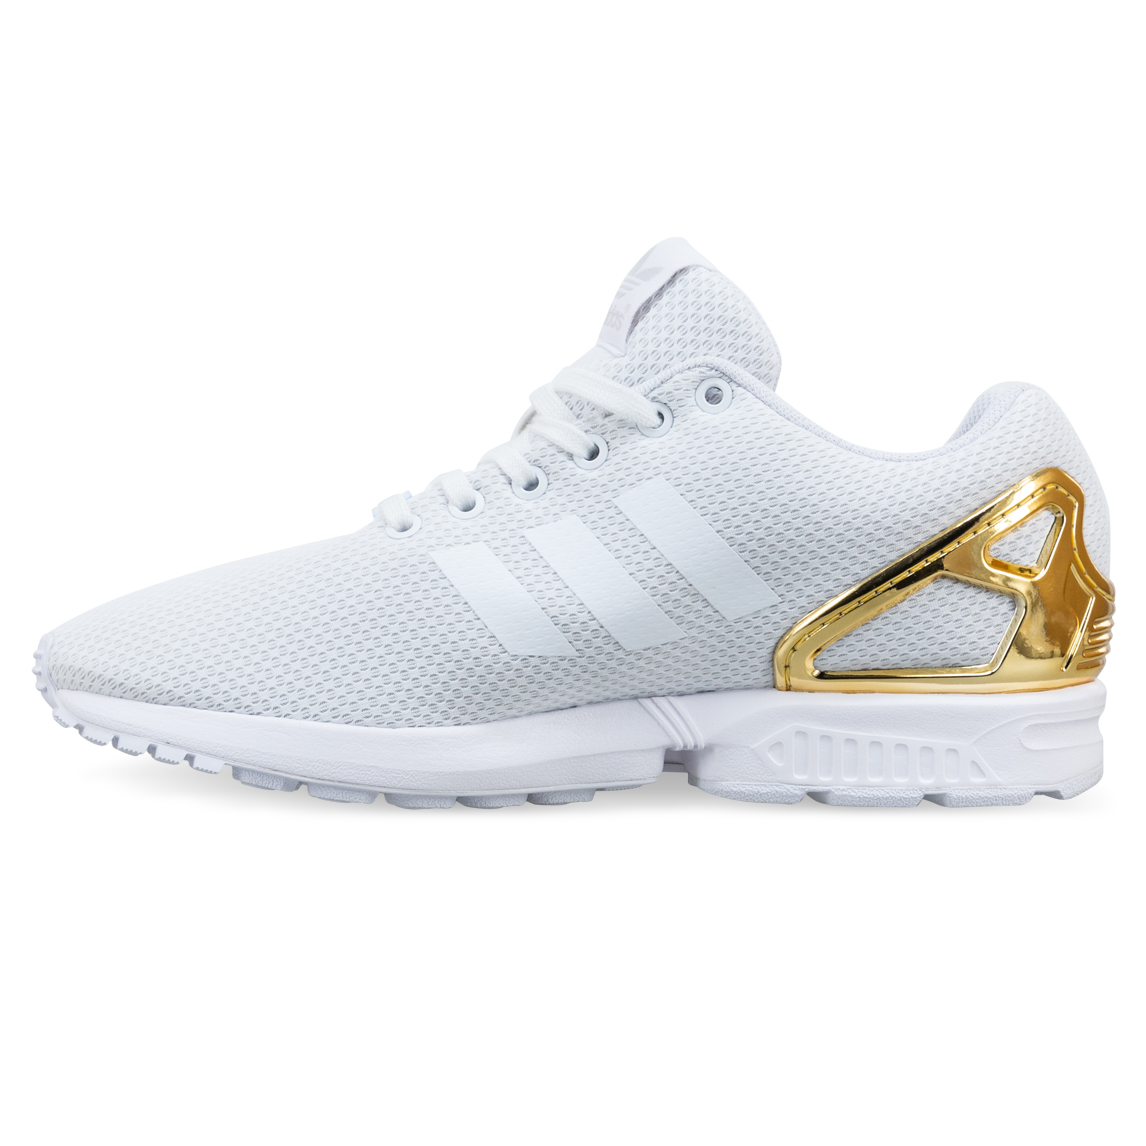 adidas zx flux white gold